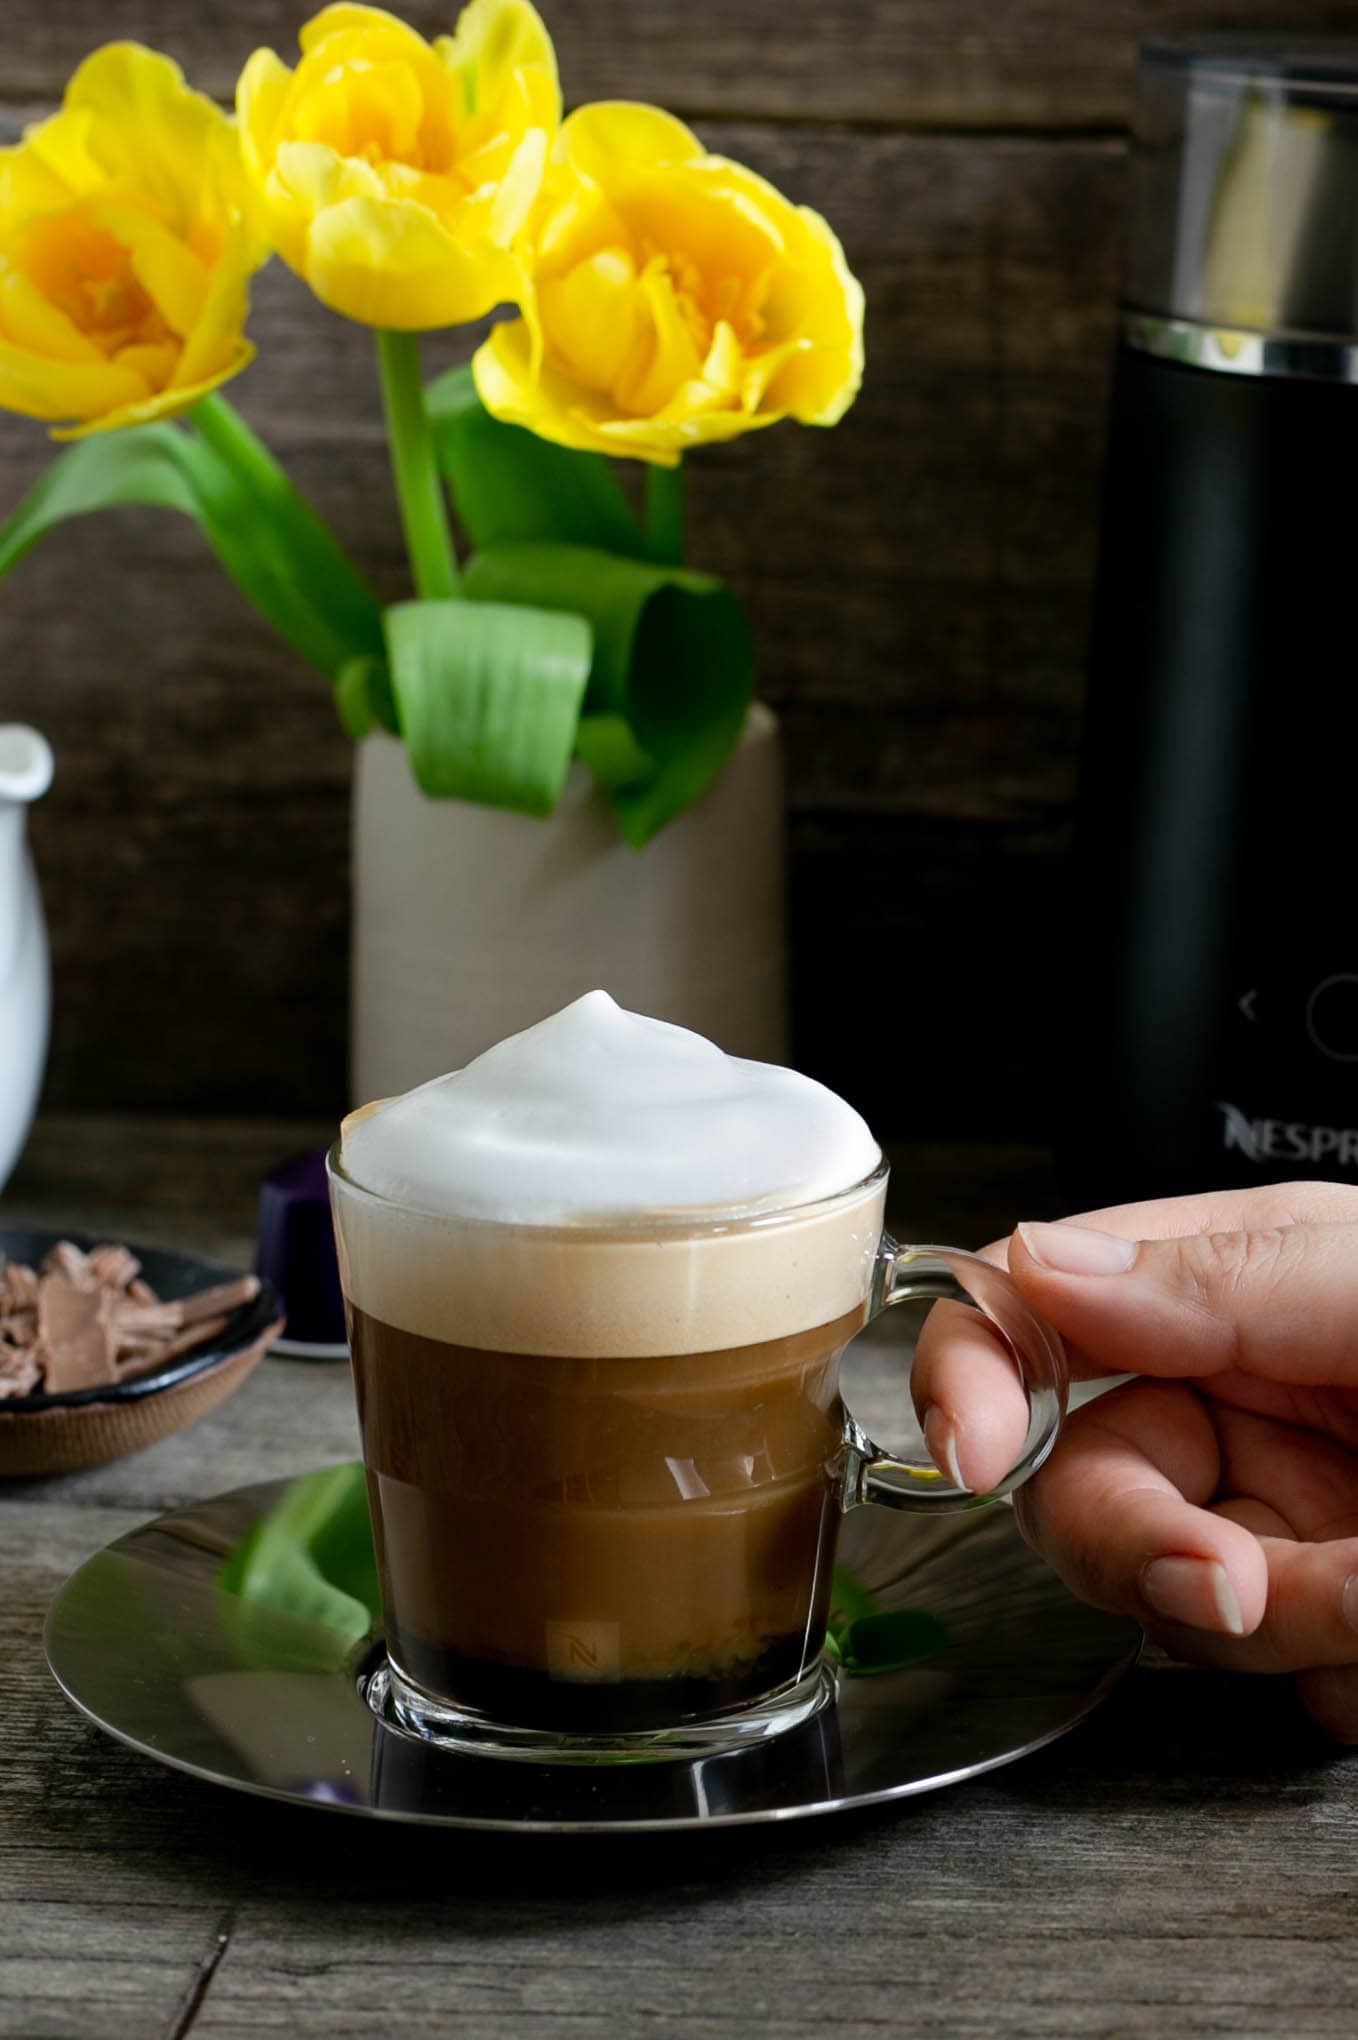 Cafe Viennois recipe using Nespresso Barista drink maker #coffee | via @annabanana.co